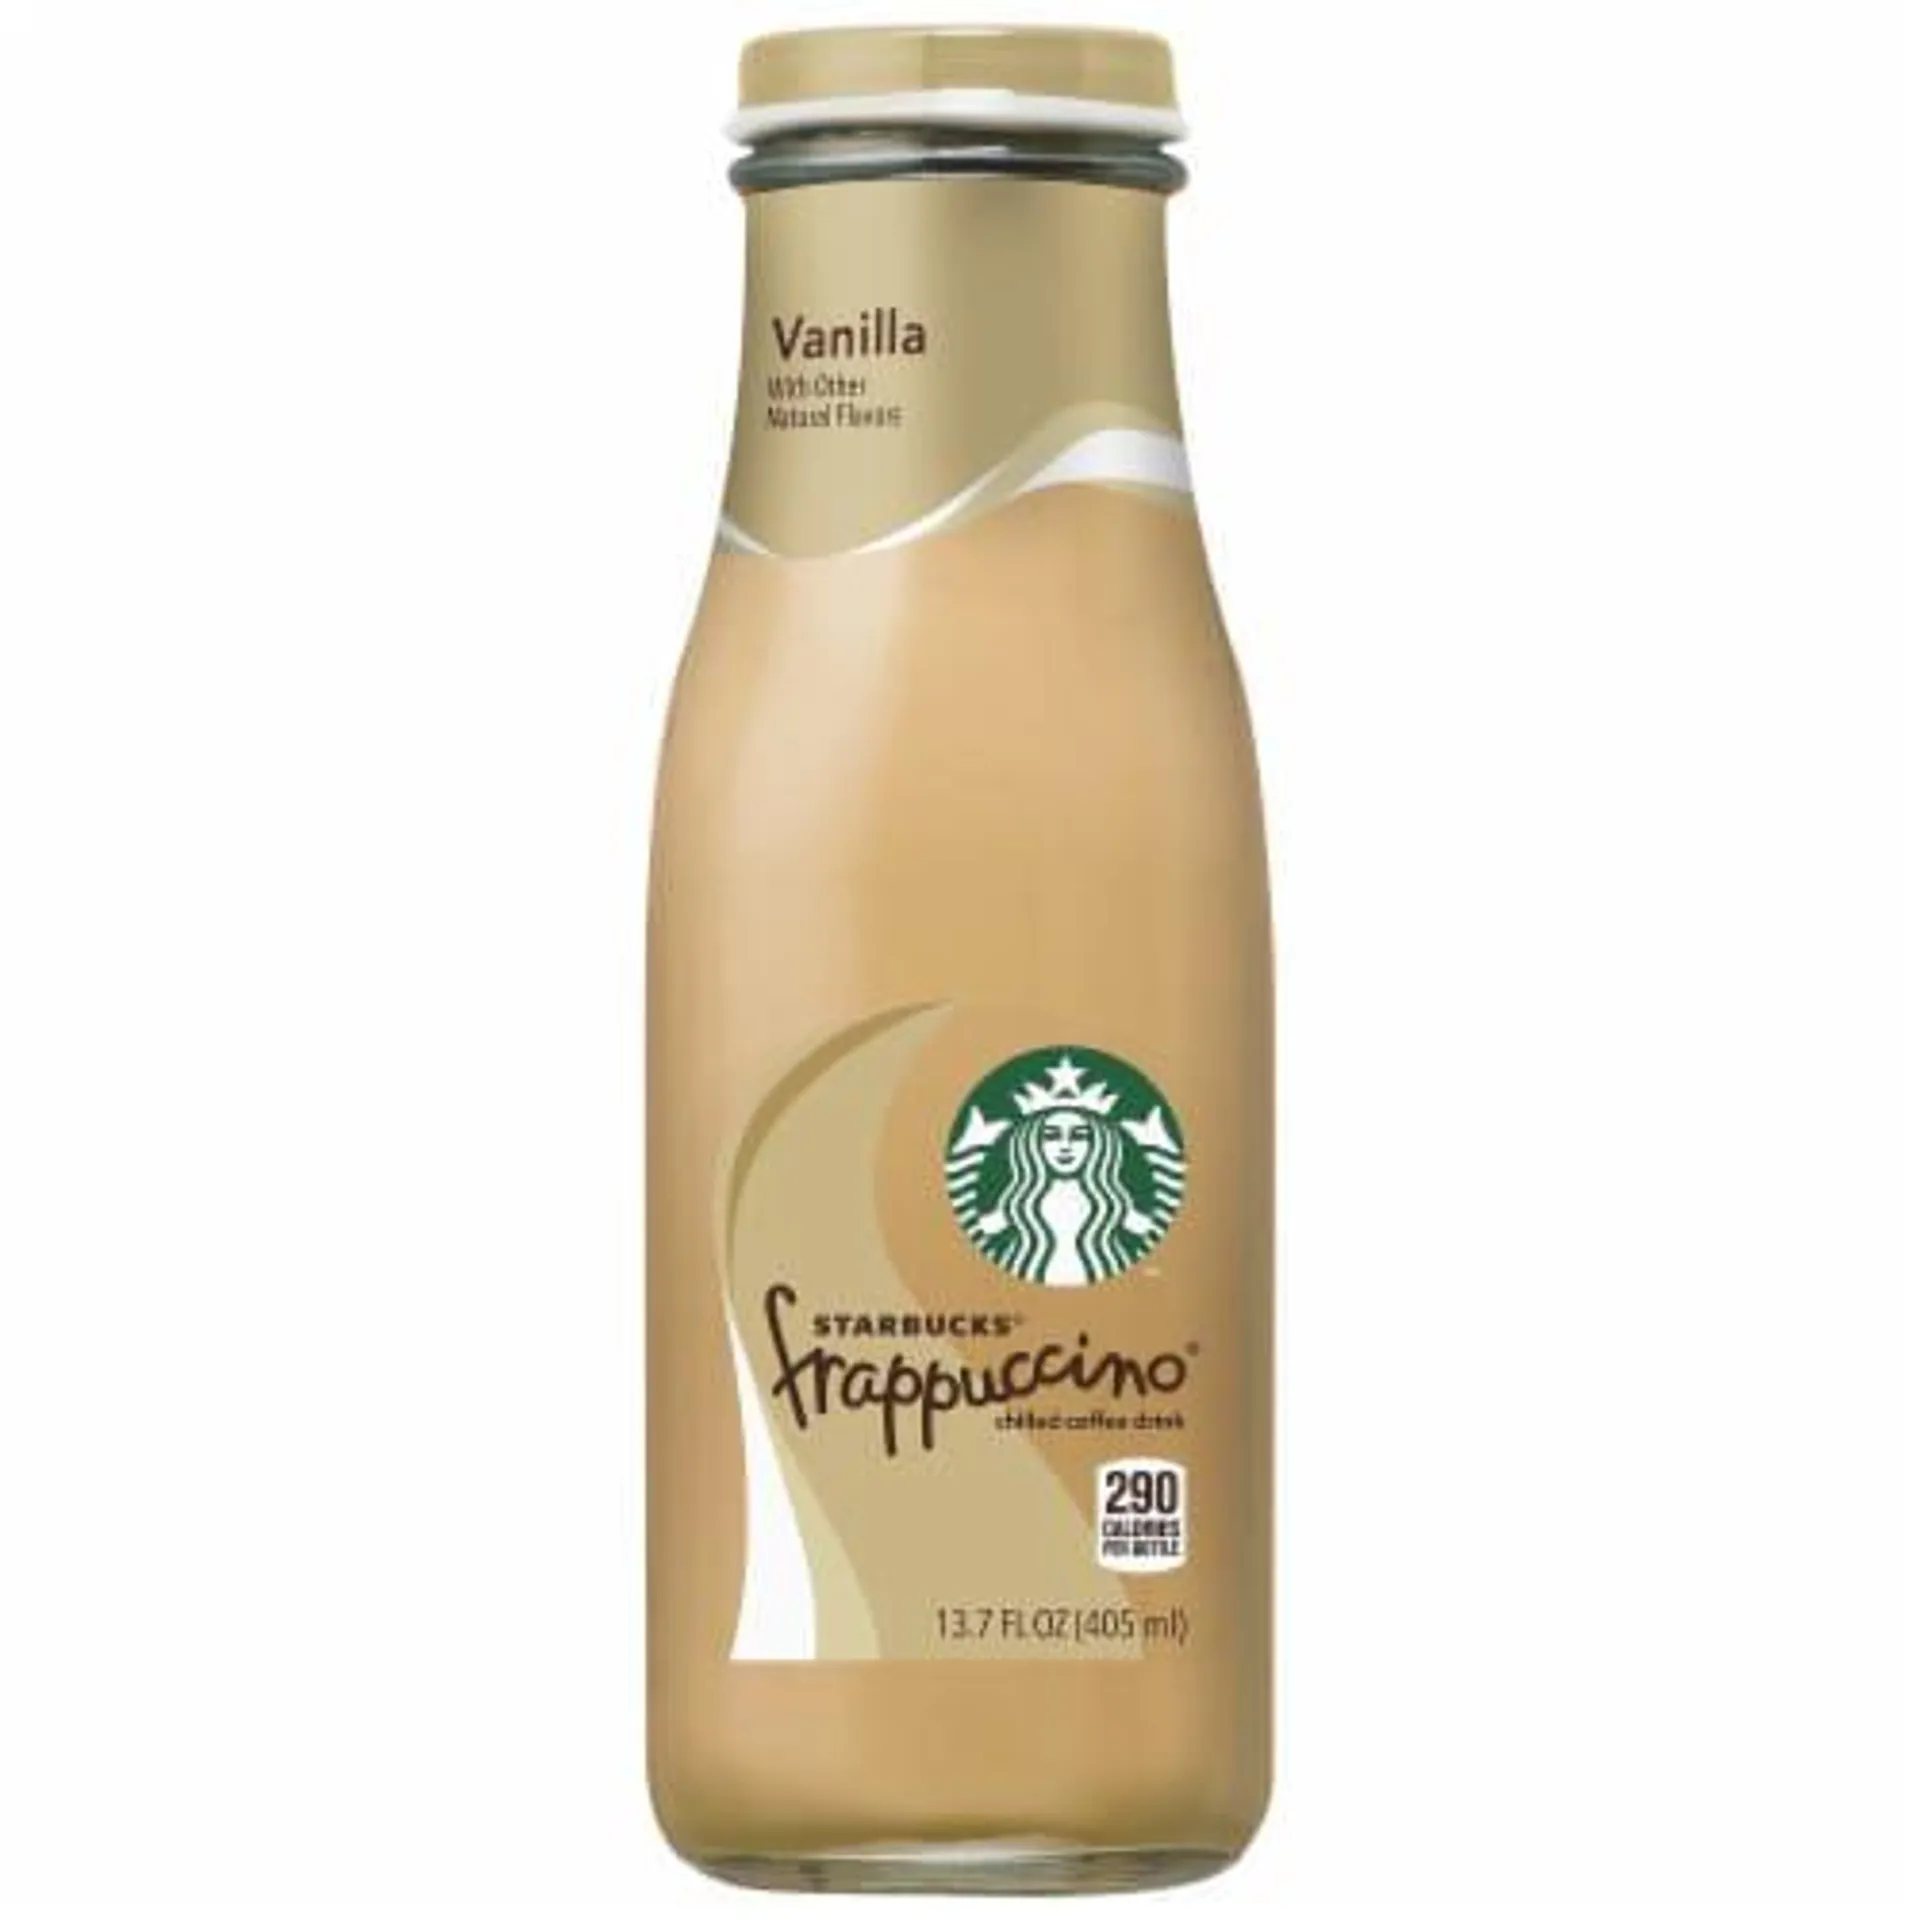 Starbucks Frappuccino Vanilla Iced Coffee Drink